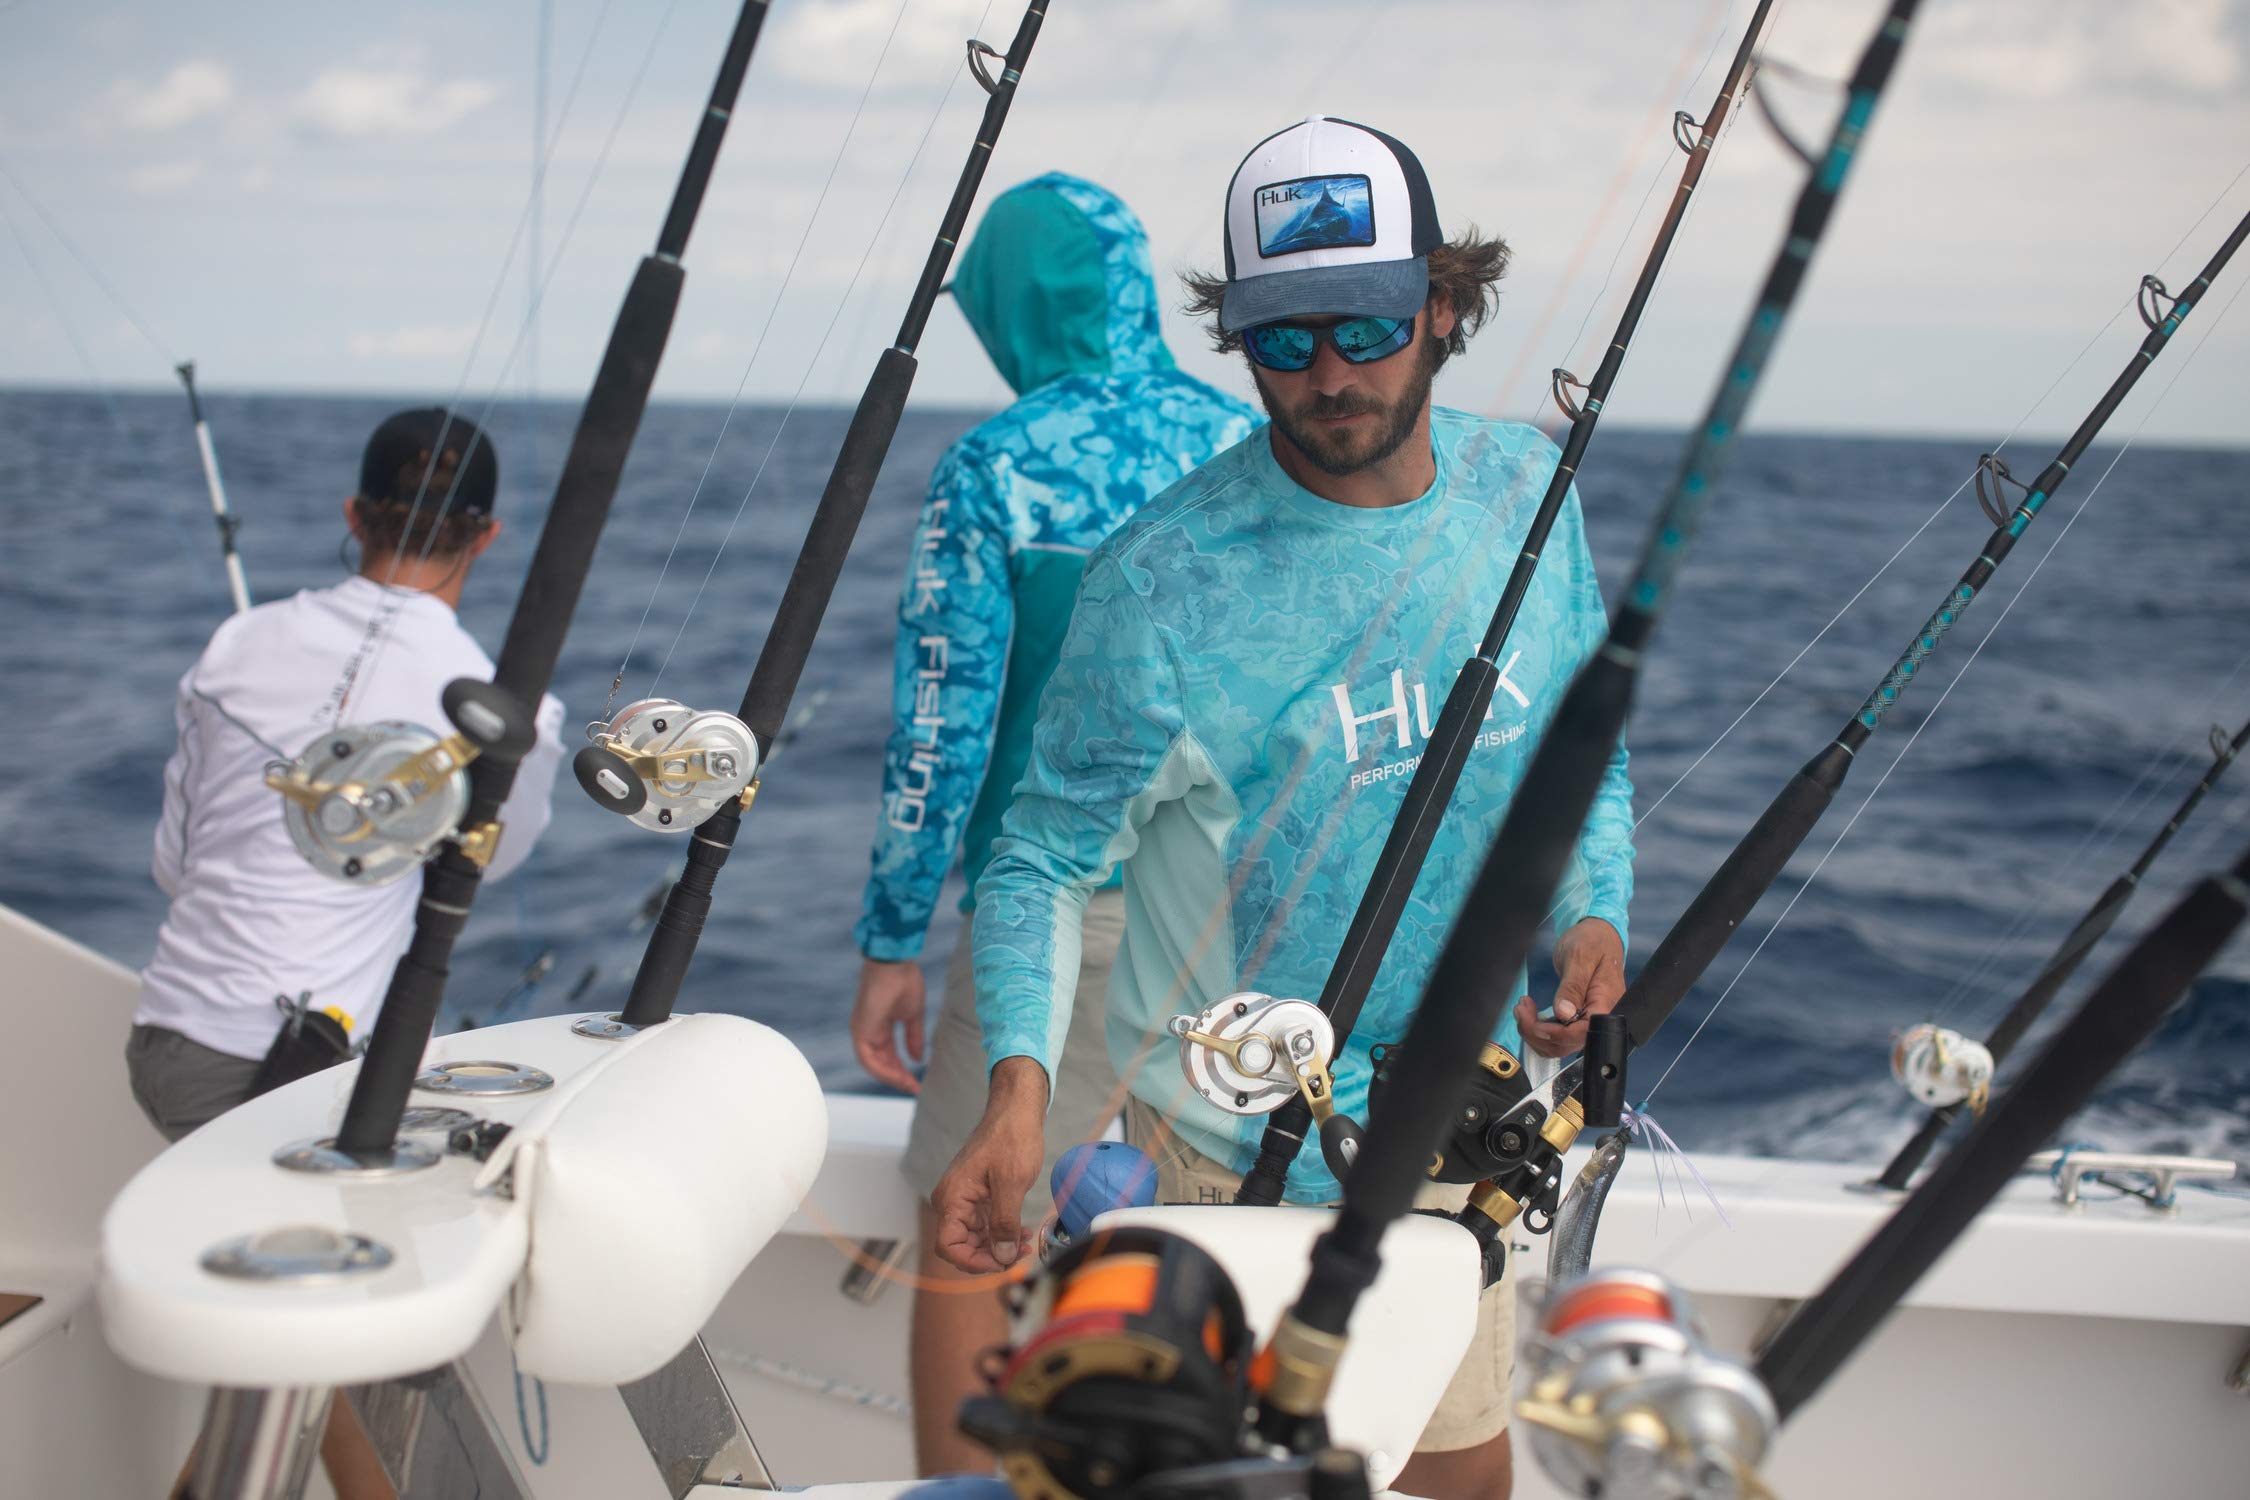 Huk Men's Icon X Camo Upf 50+ Long-sleeve Fishing Shirt (Multiple